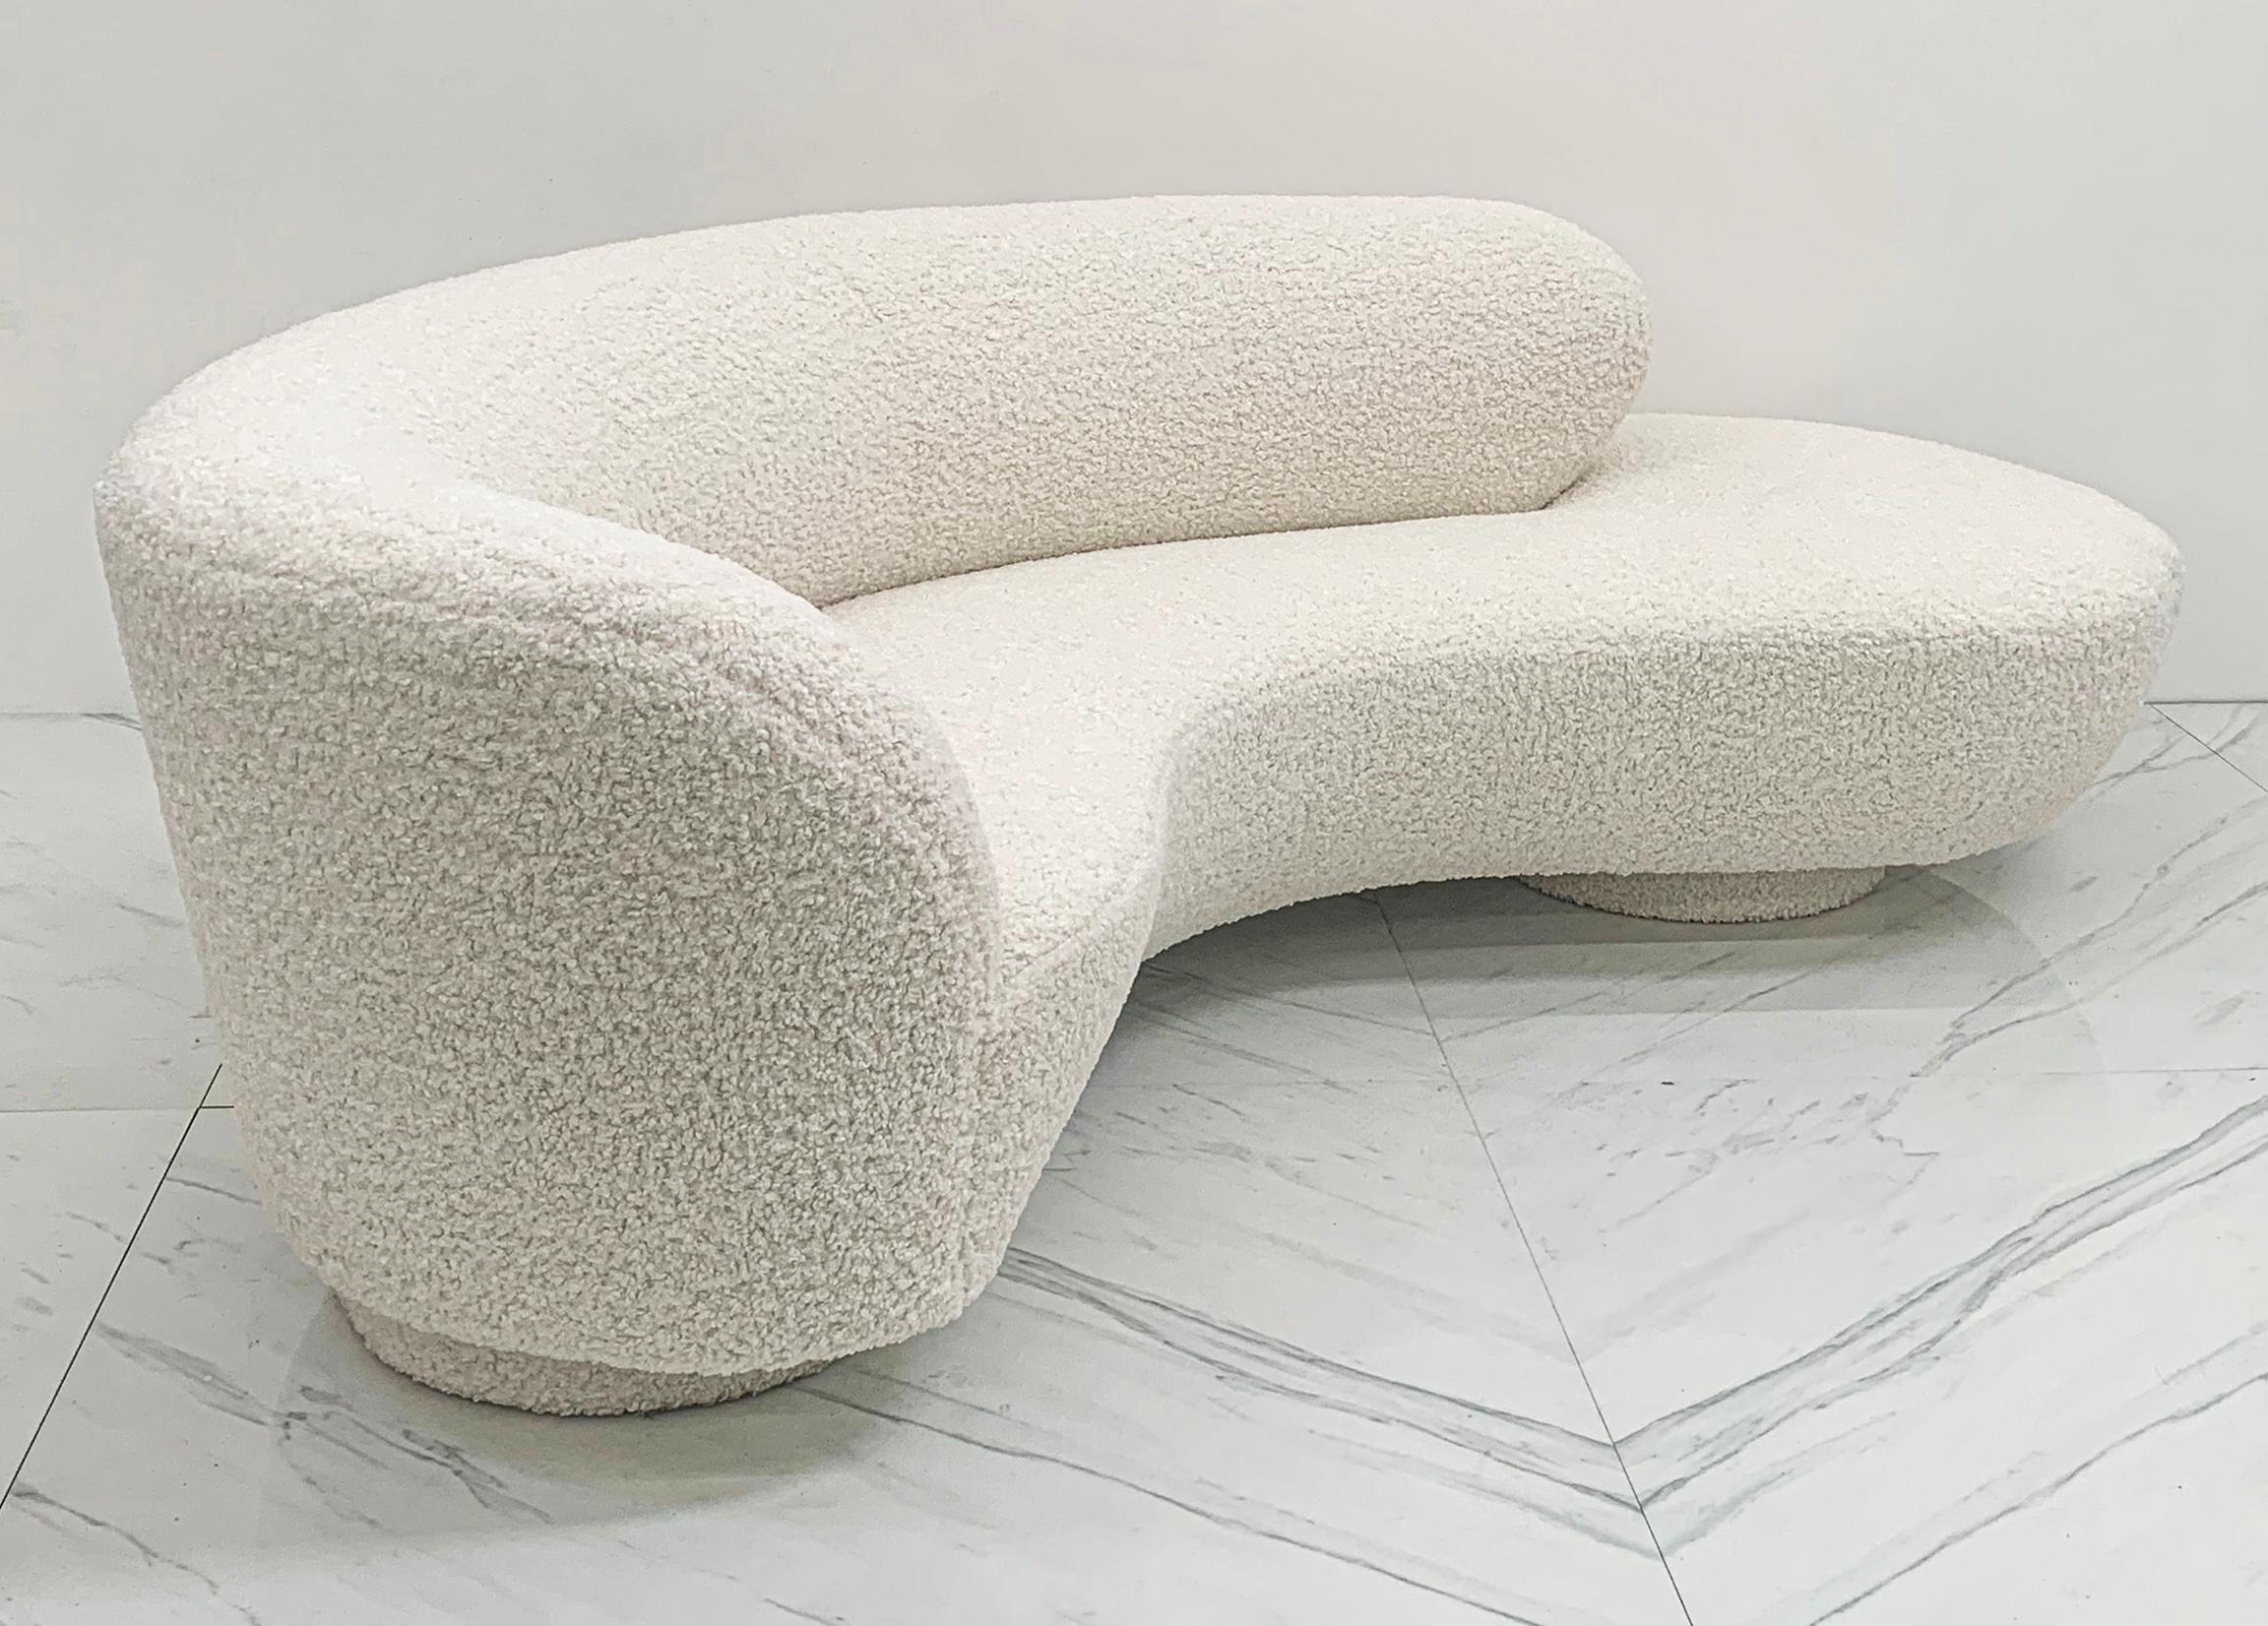 Bouclé Vladimir Kagan Cloud Serpentine Sofa Upholstered in Heavy Ivory Boucle